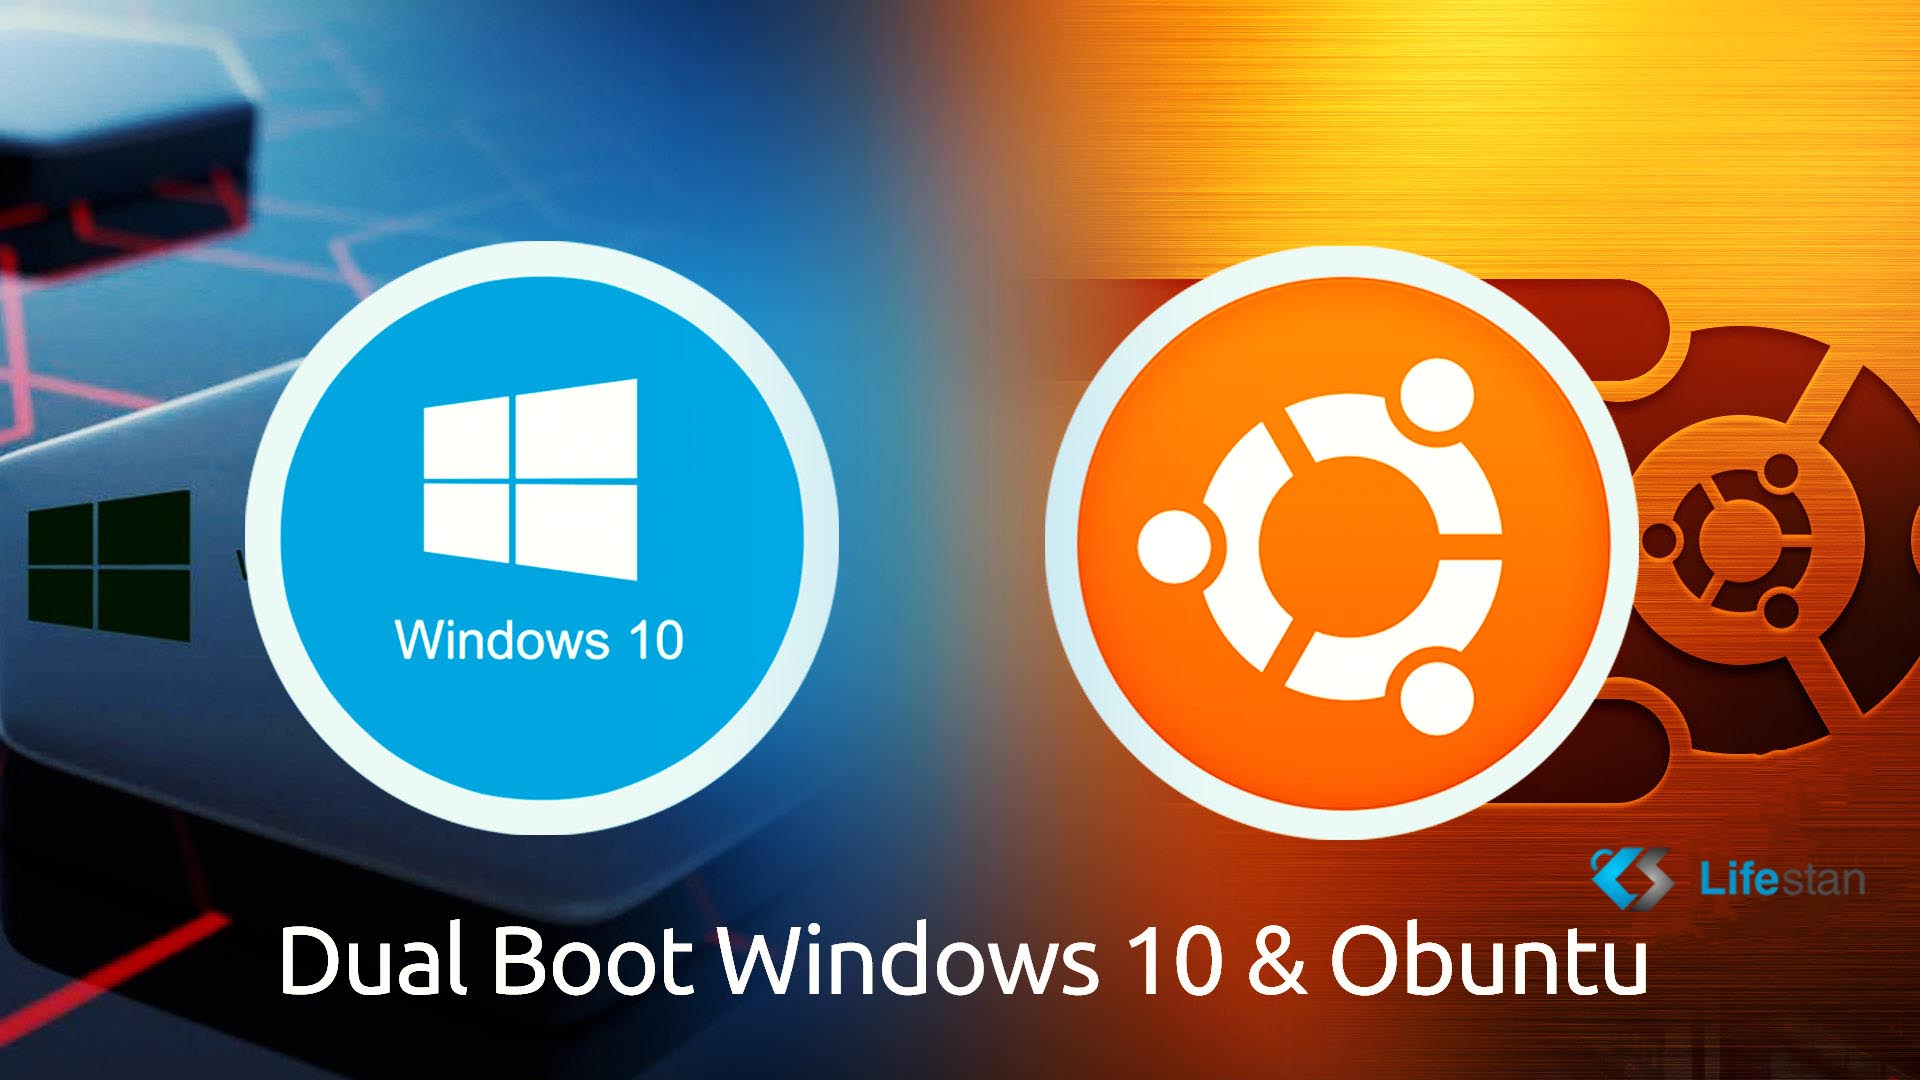 Dual Boot Windows 10 and Ubuntu on Hyper-V - lifestan